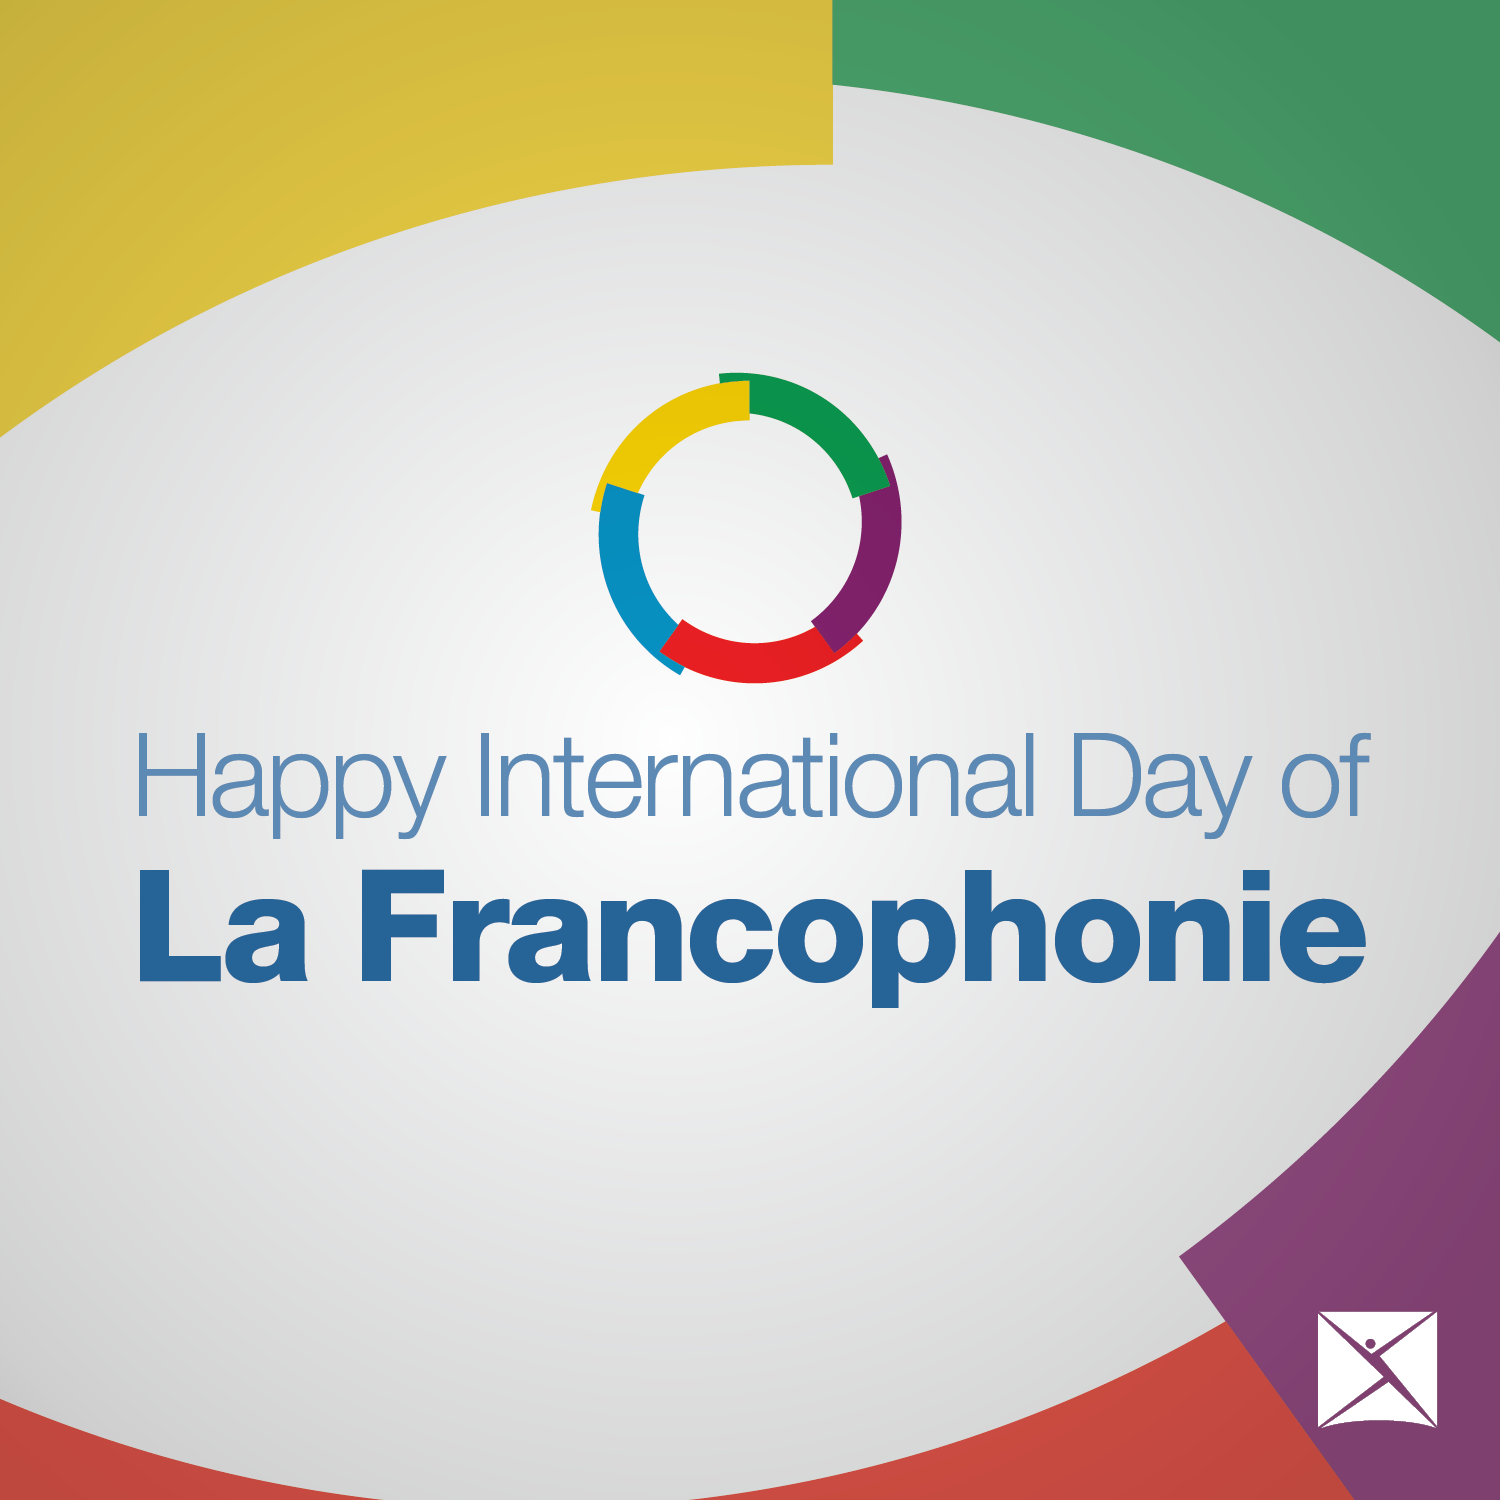 Happy International Day of La Francophonie!